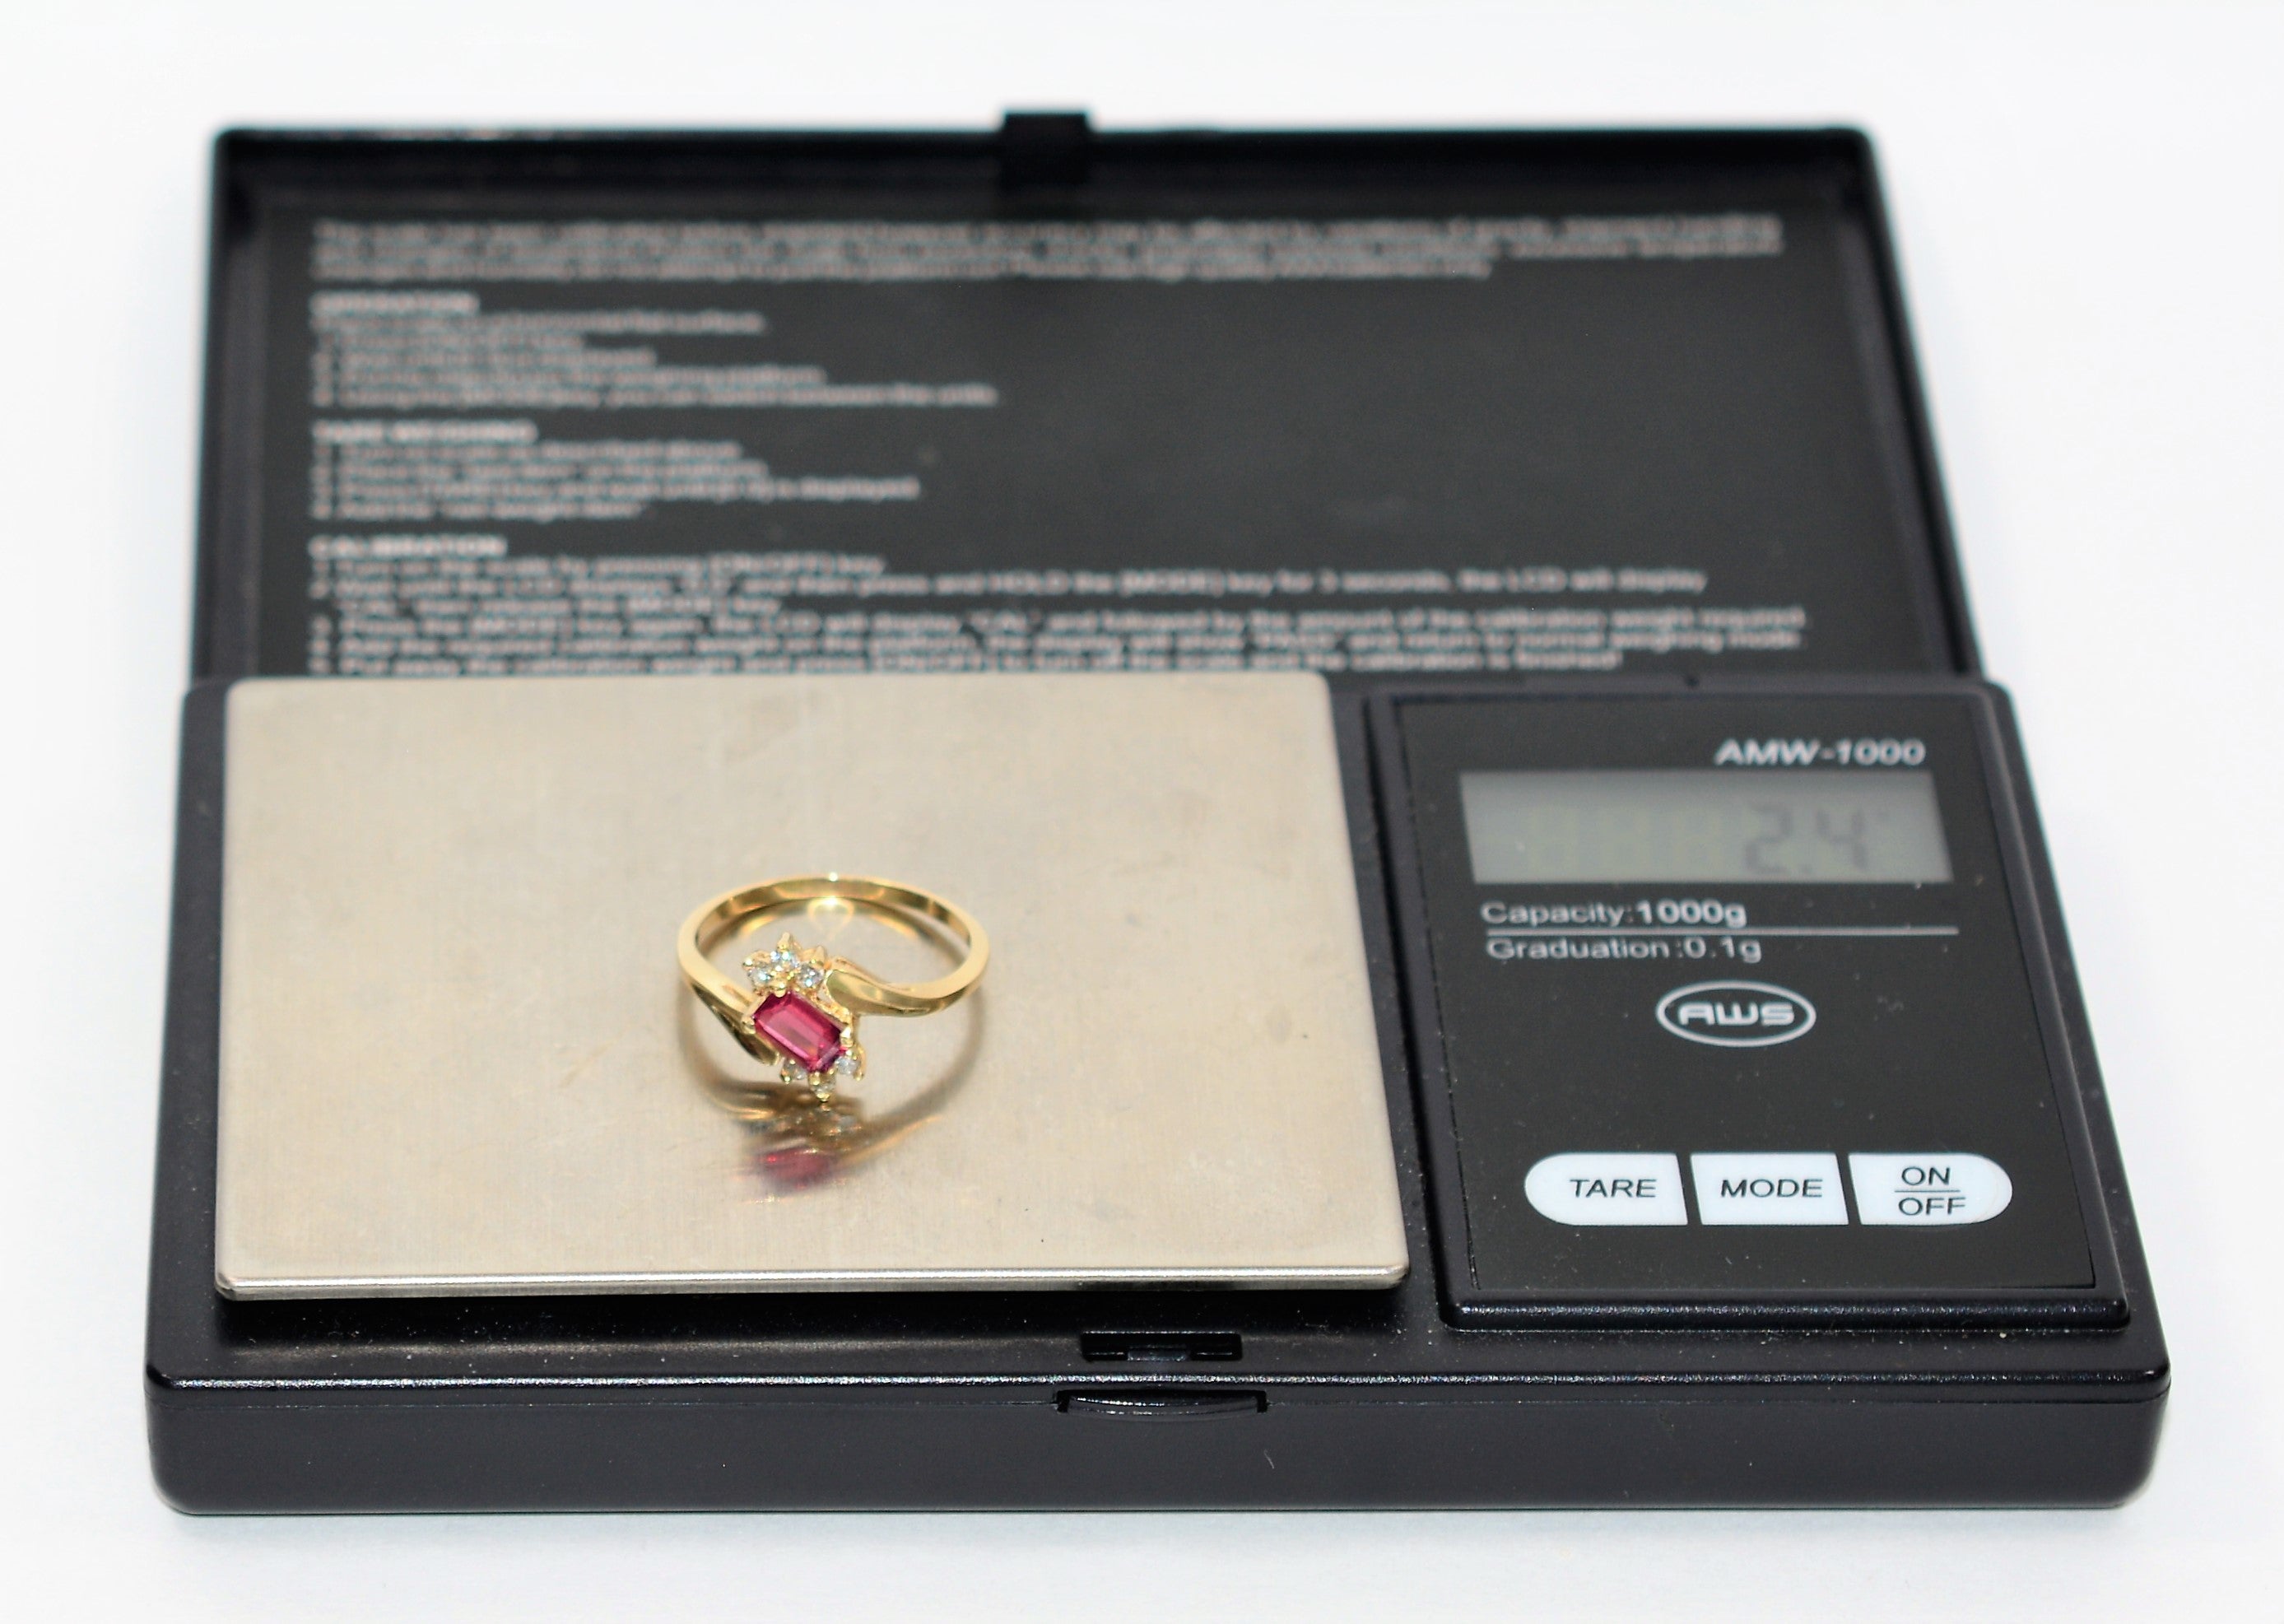 Natural Rubellite & Diamond Ring 14K Solid Gold .82tcw Pink Tourmaline Ring Statement Ring Womens Ring Gemstone Ring Birthstone Ring Jewelry